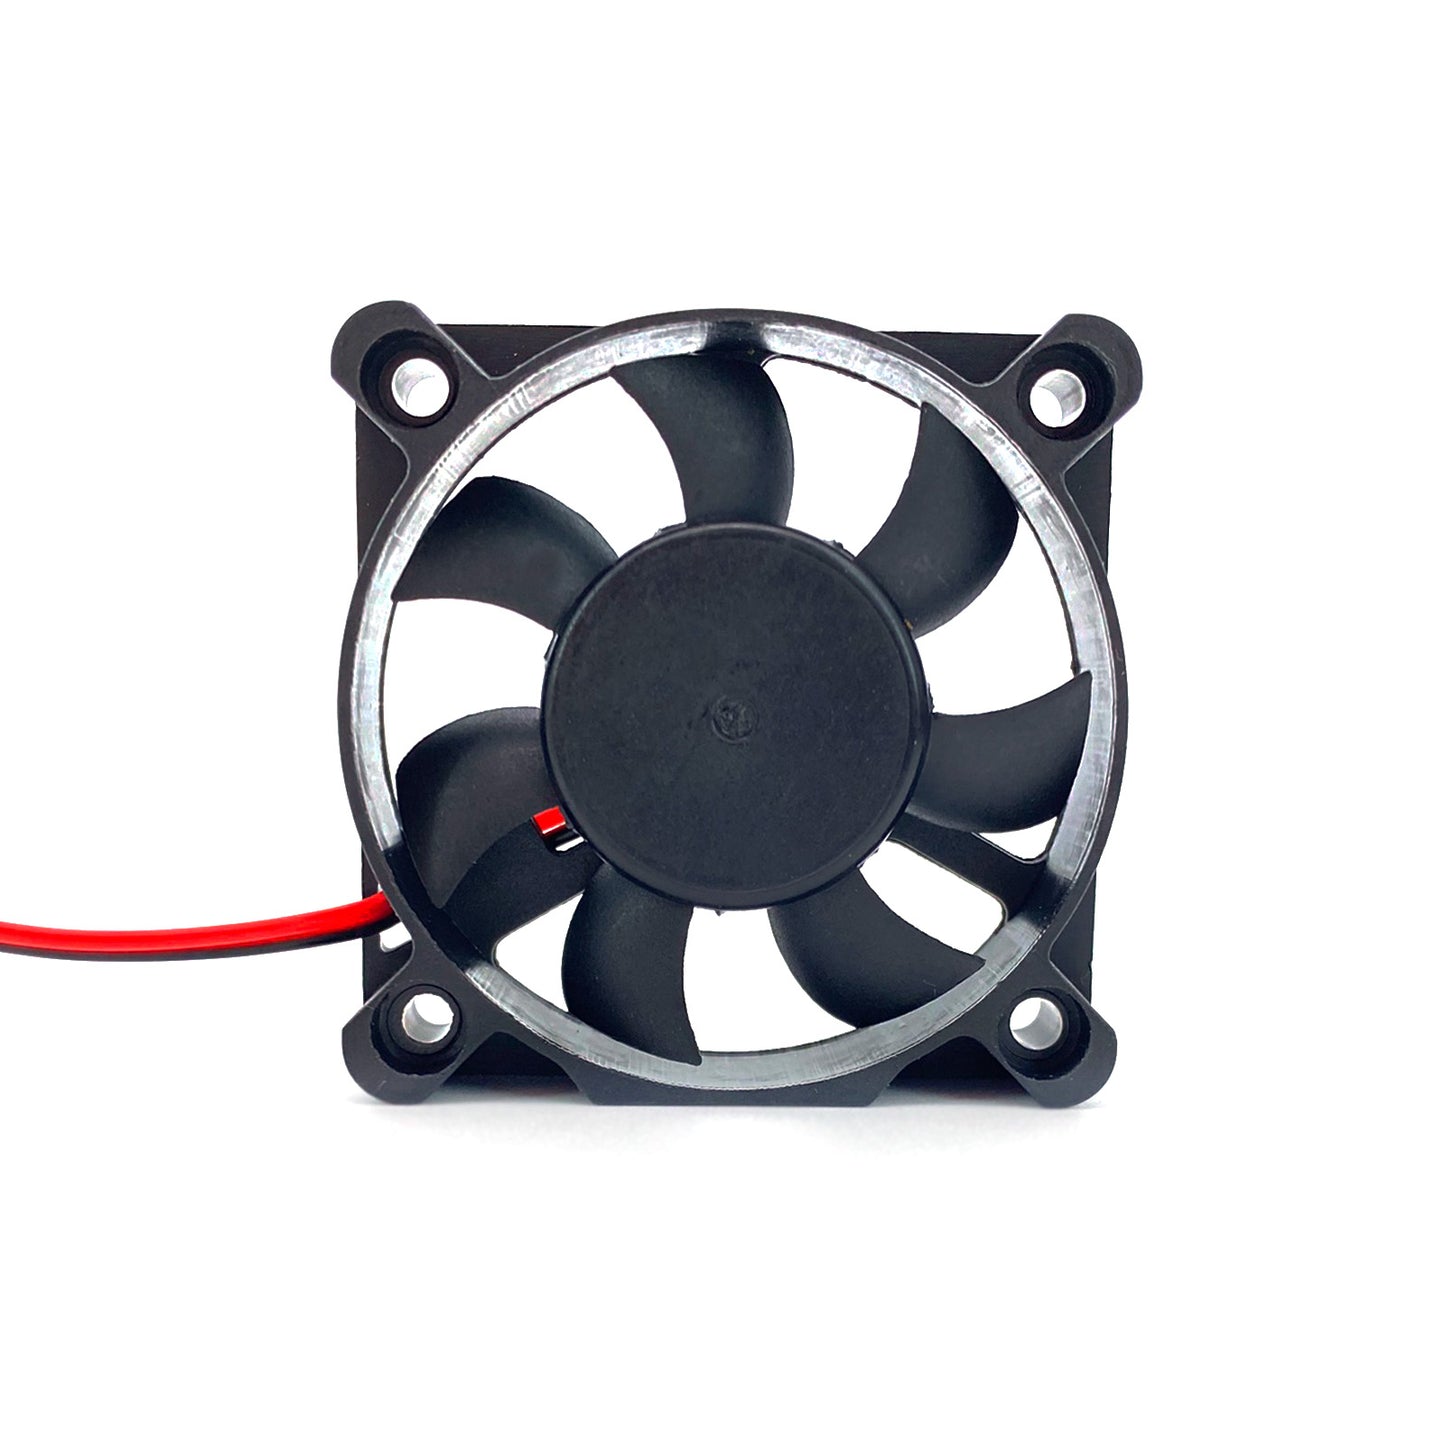 5010 Radiallüfter CPU Lüfter Bauteilkühler 5V Fan Cooler